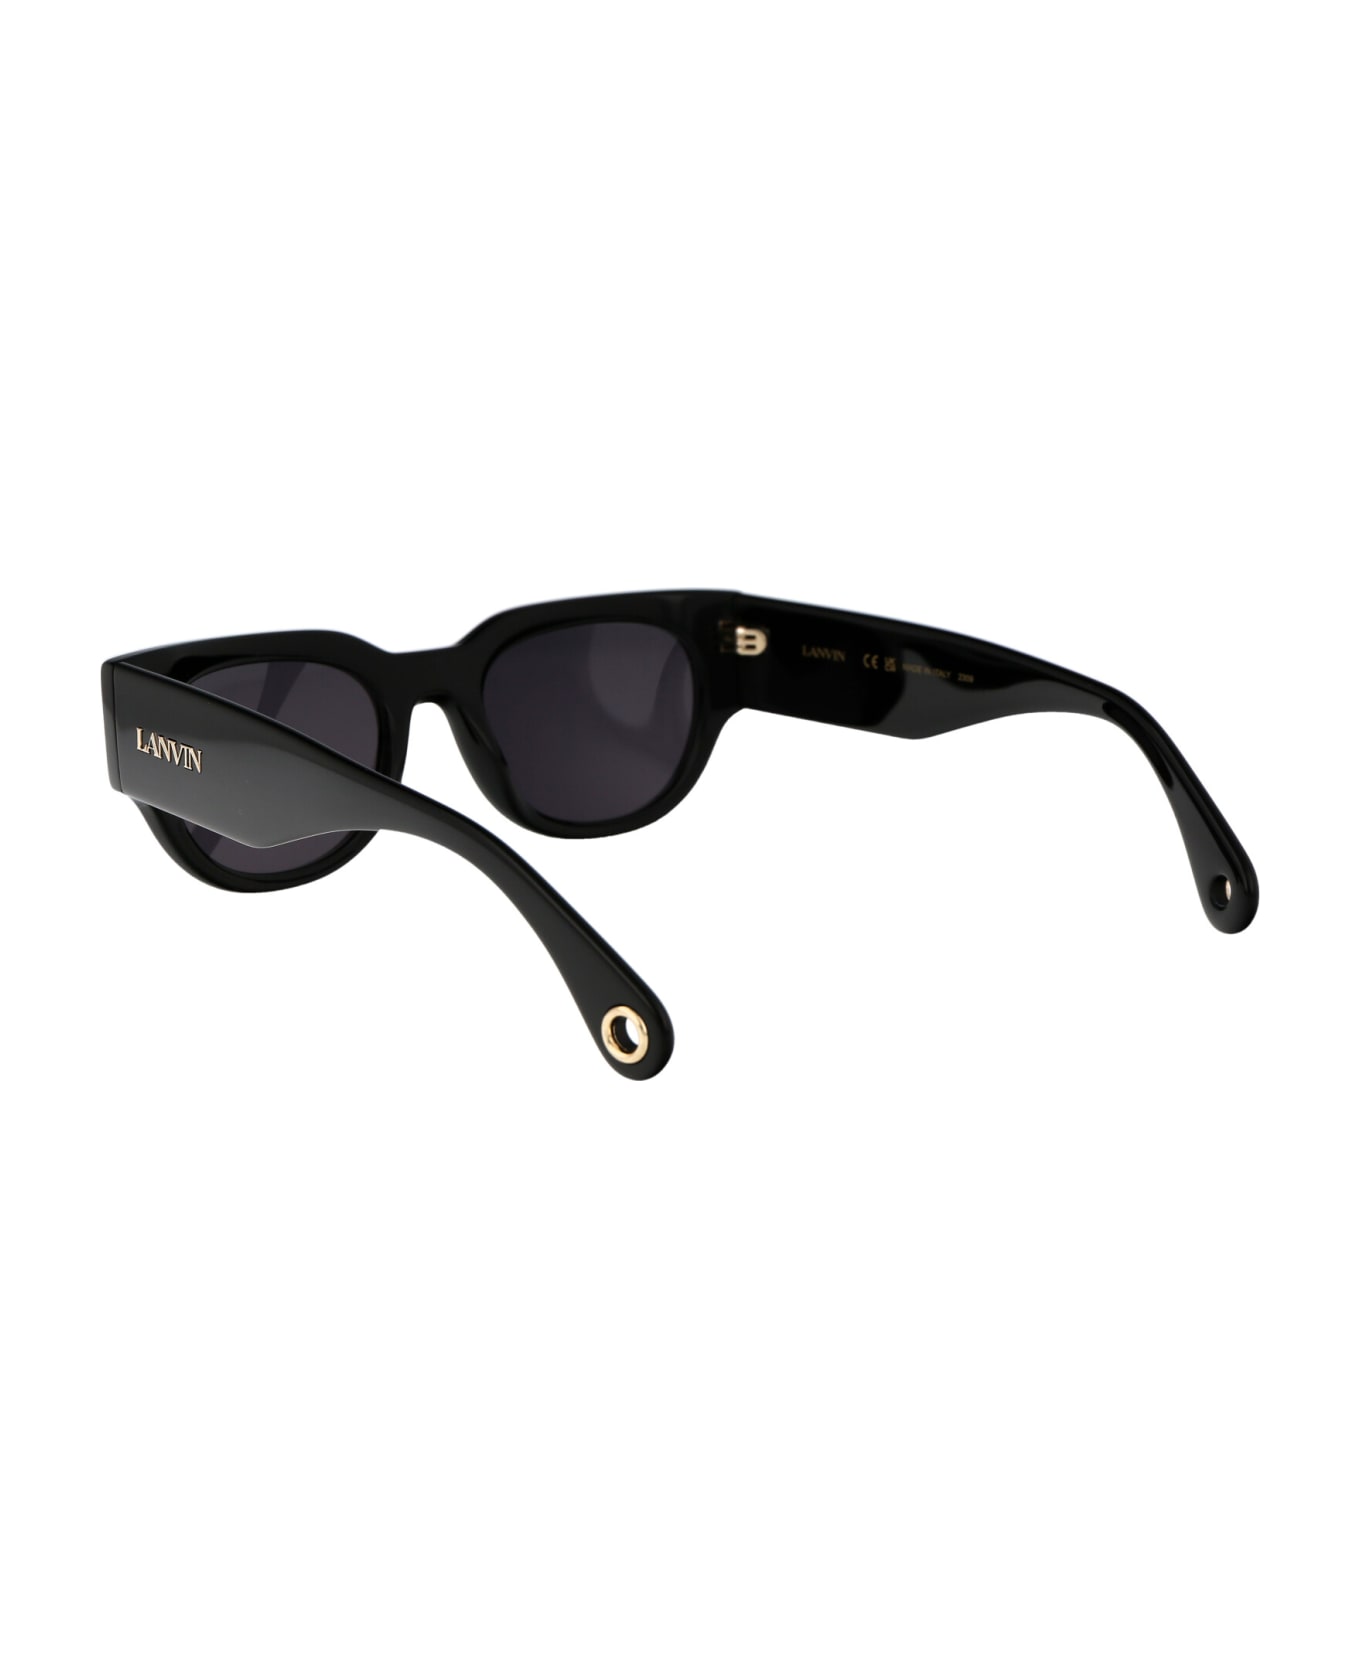 Lanvin Lnv670s Sunglasses - 001 BLACK サングラス